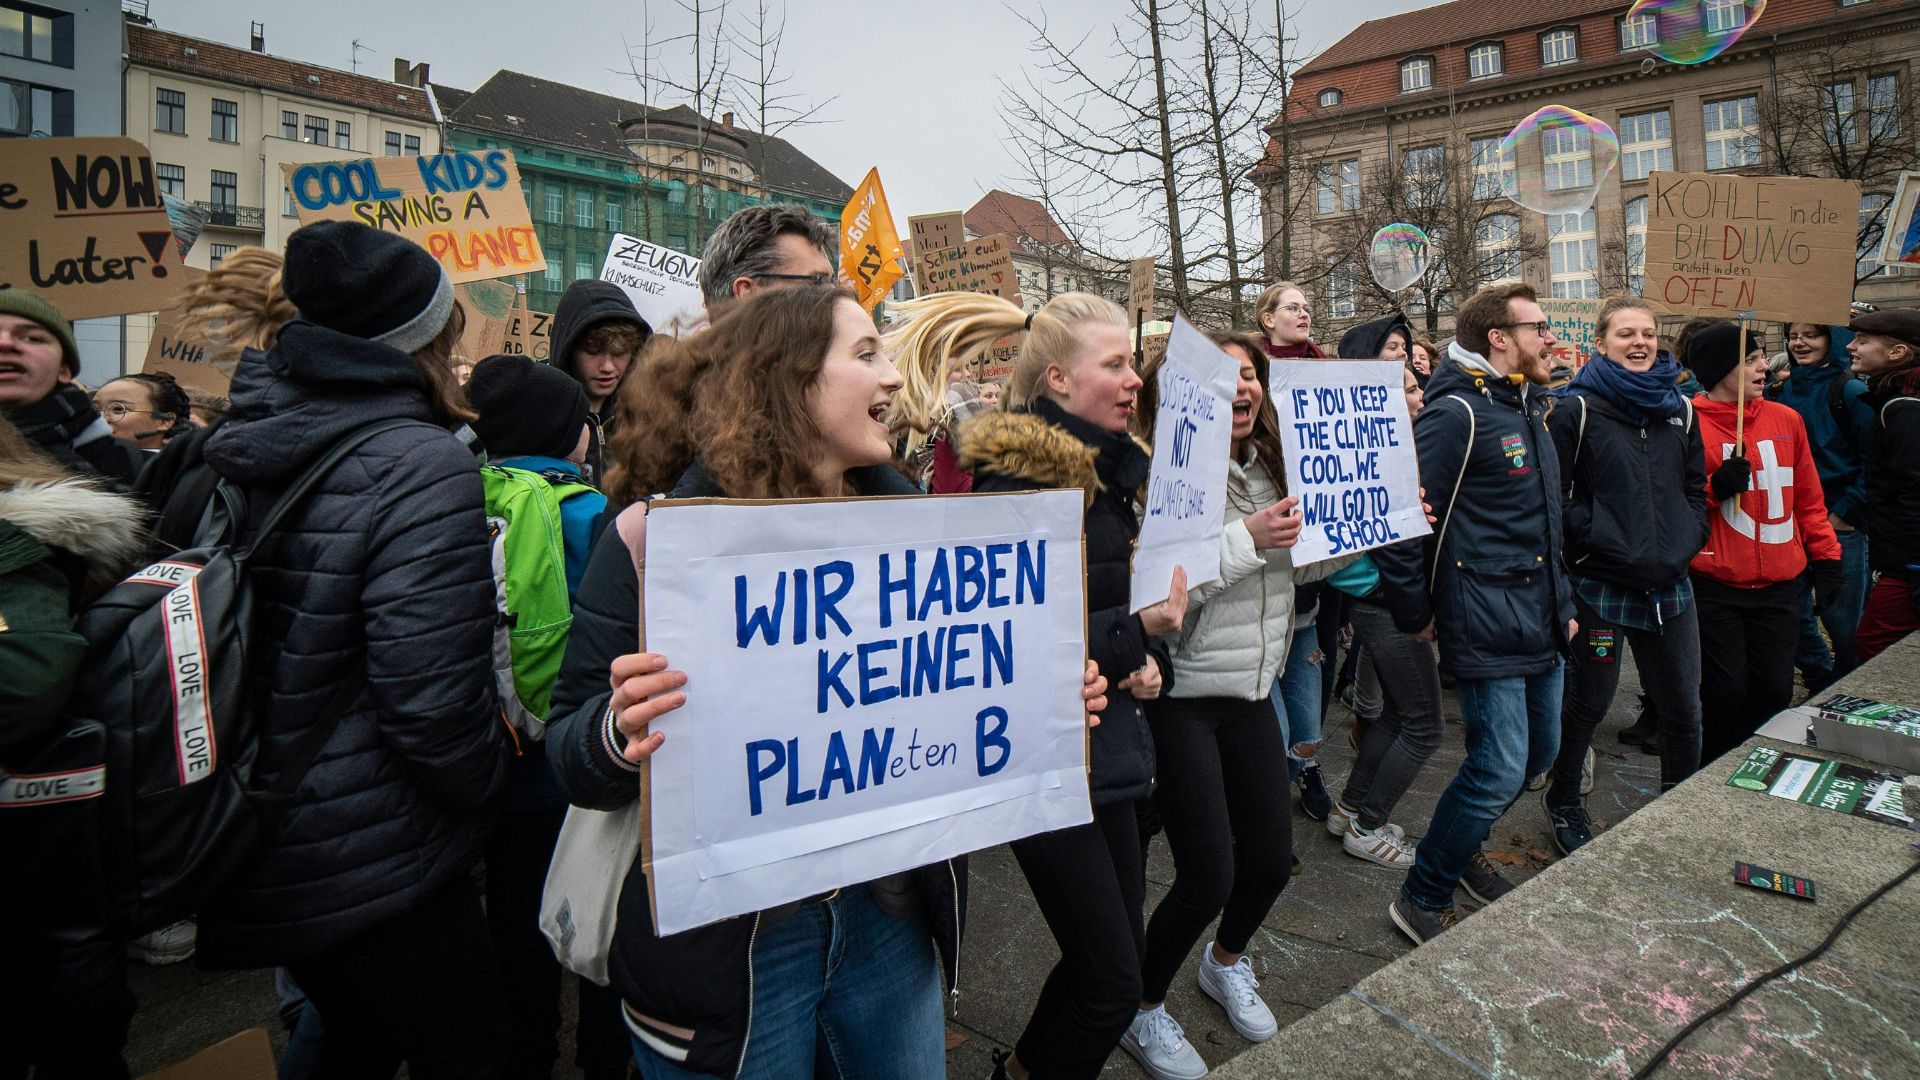 Swedish student leader Greta Thunberg and Anuna Anuna De Wever, a Belgian climate student activist win EU pledge to spend billions on climate change